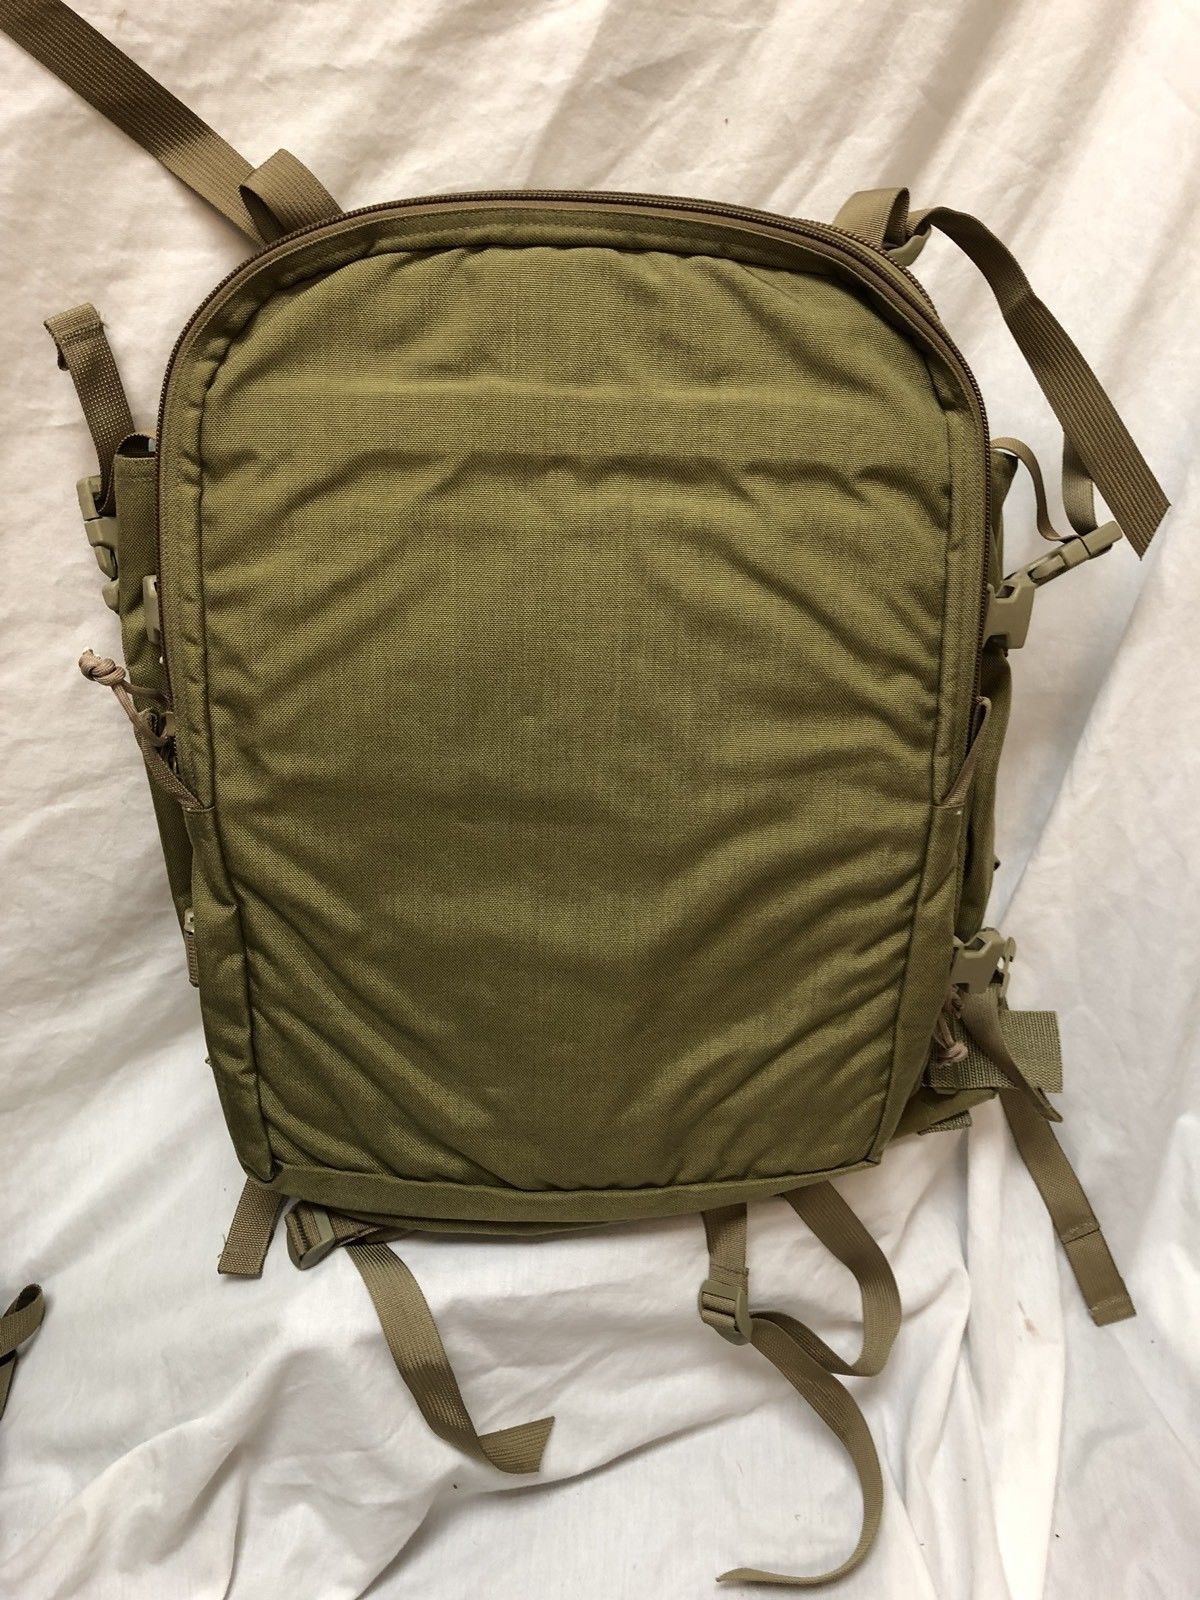 Webbingbabel: Eagle Industries A-III Medic 3-Day Assault Backpack OD Green